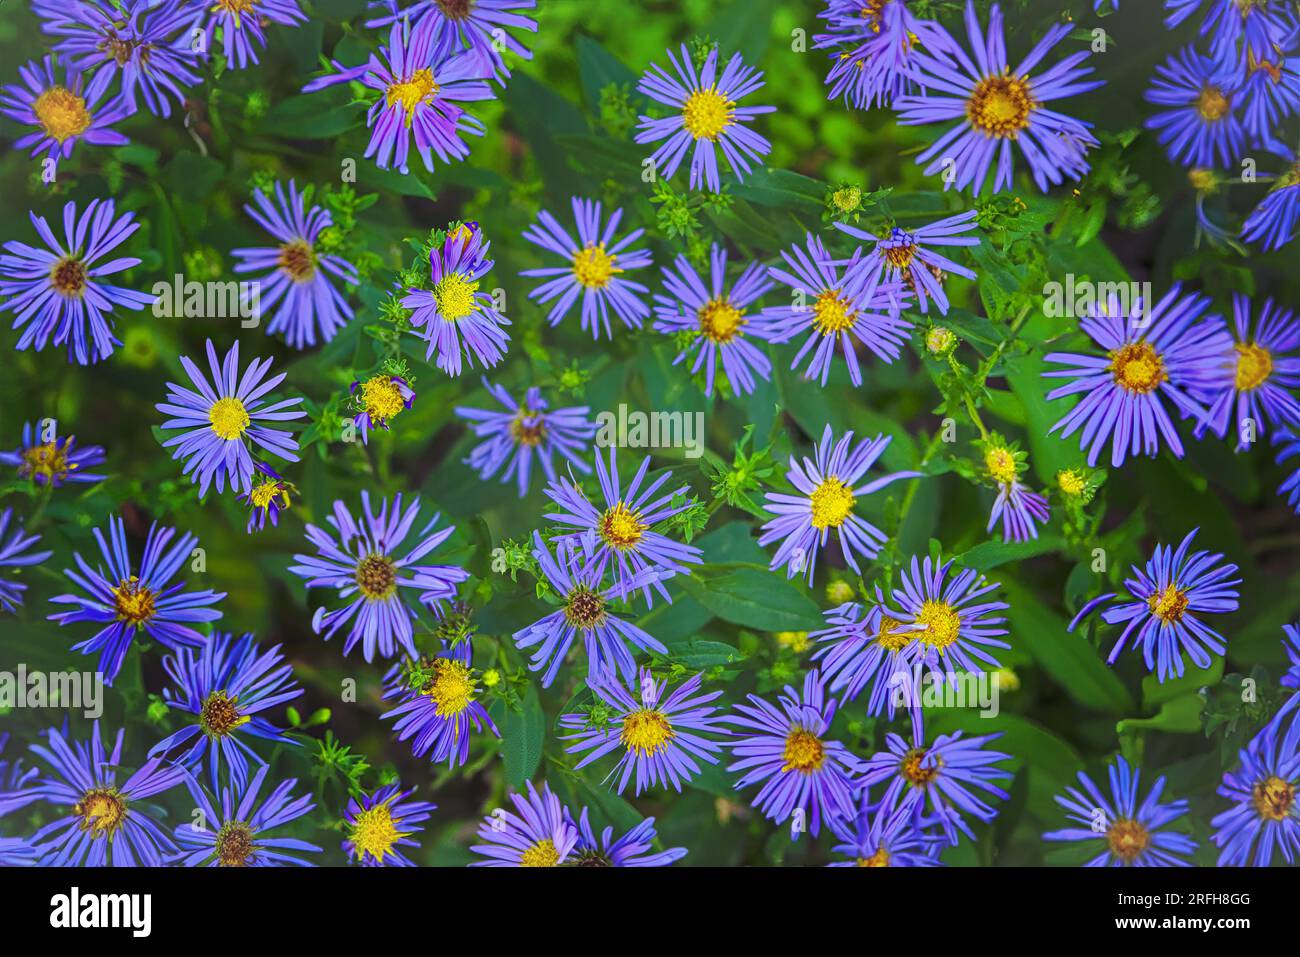 Purple Michaelmas daisy flowers, Aster amellus Rudolf goethe, in a garden. Stock Photo